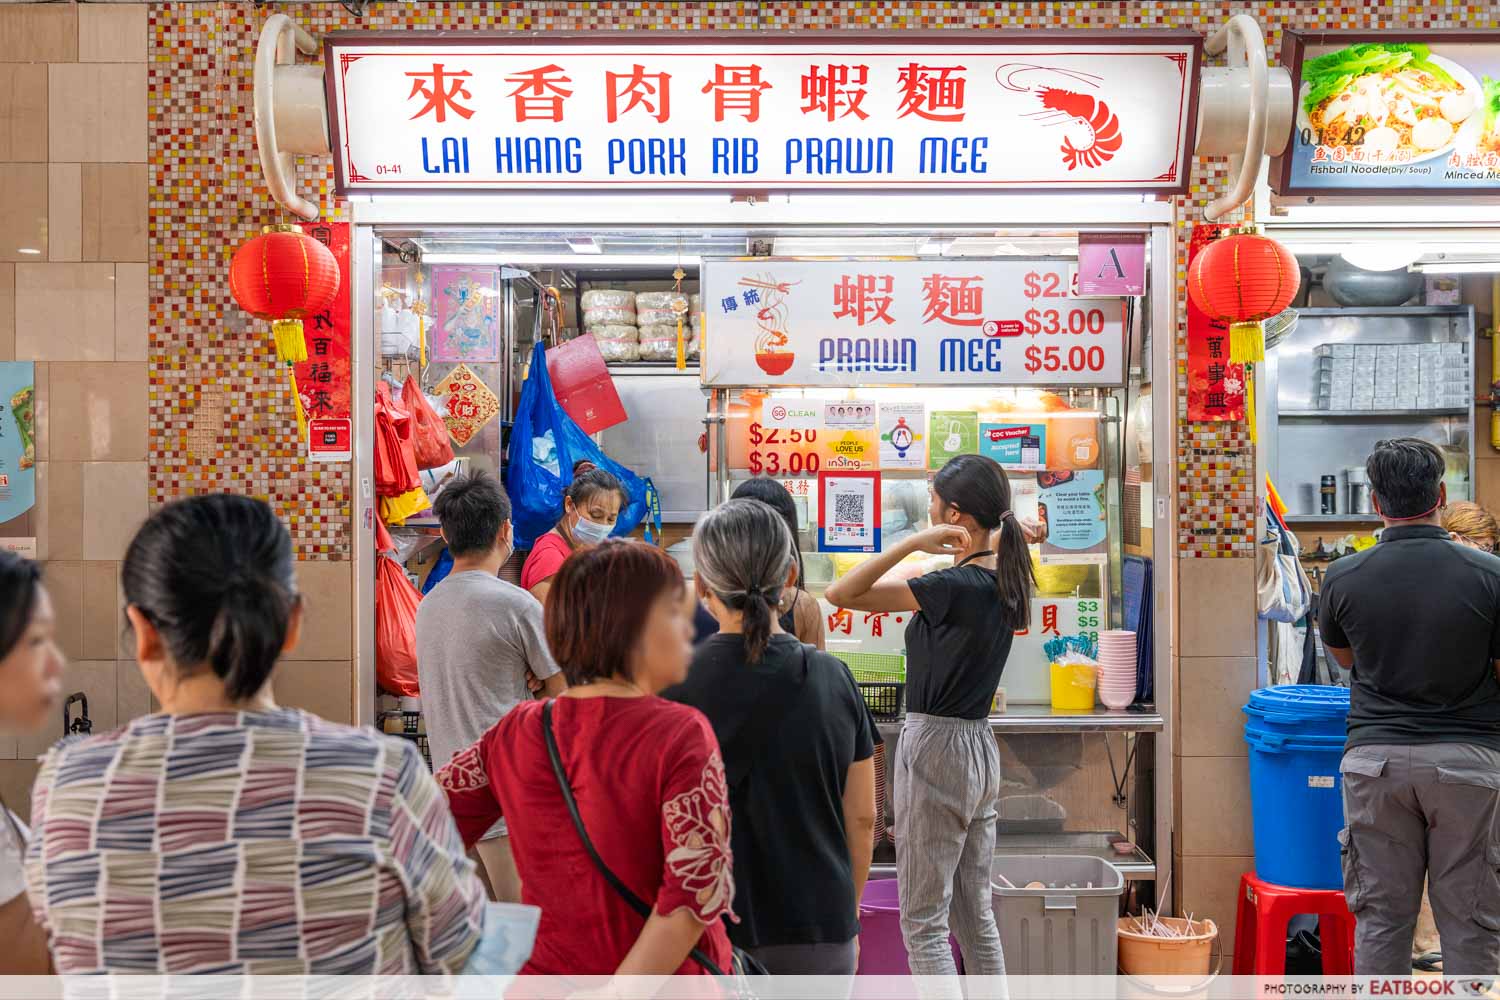 lai-hiang-pork-rib-prawn-mee-storefront